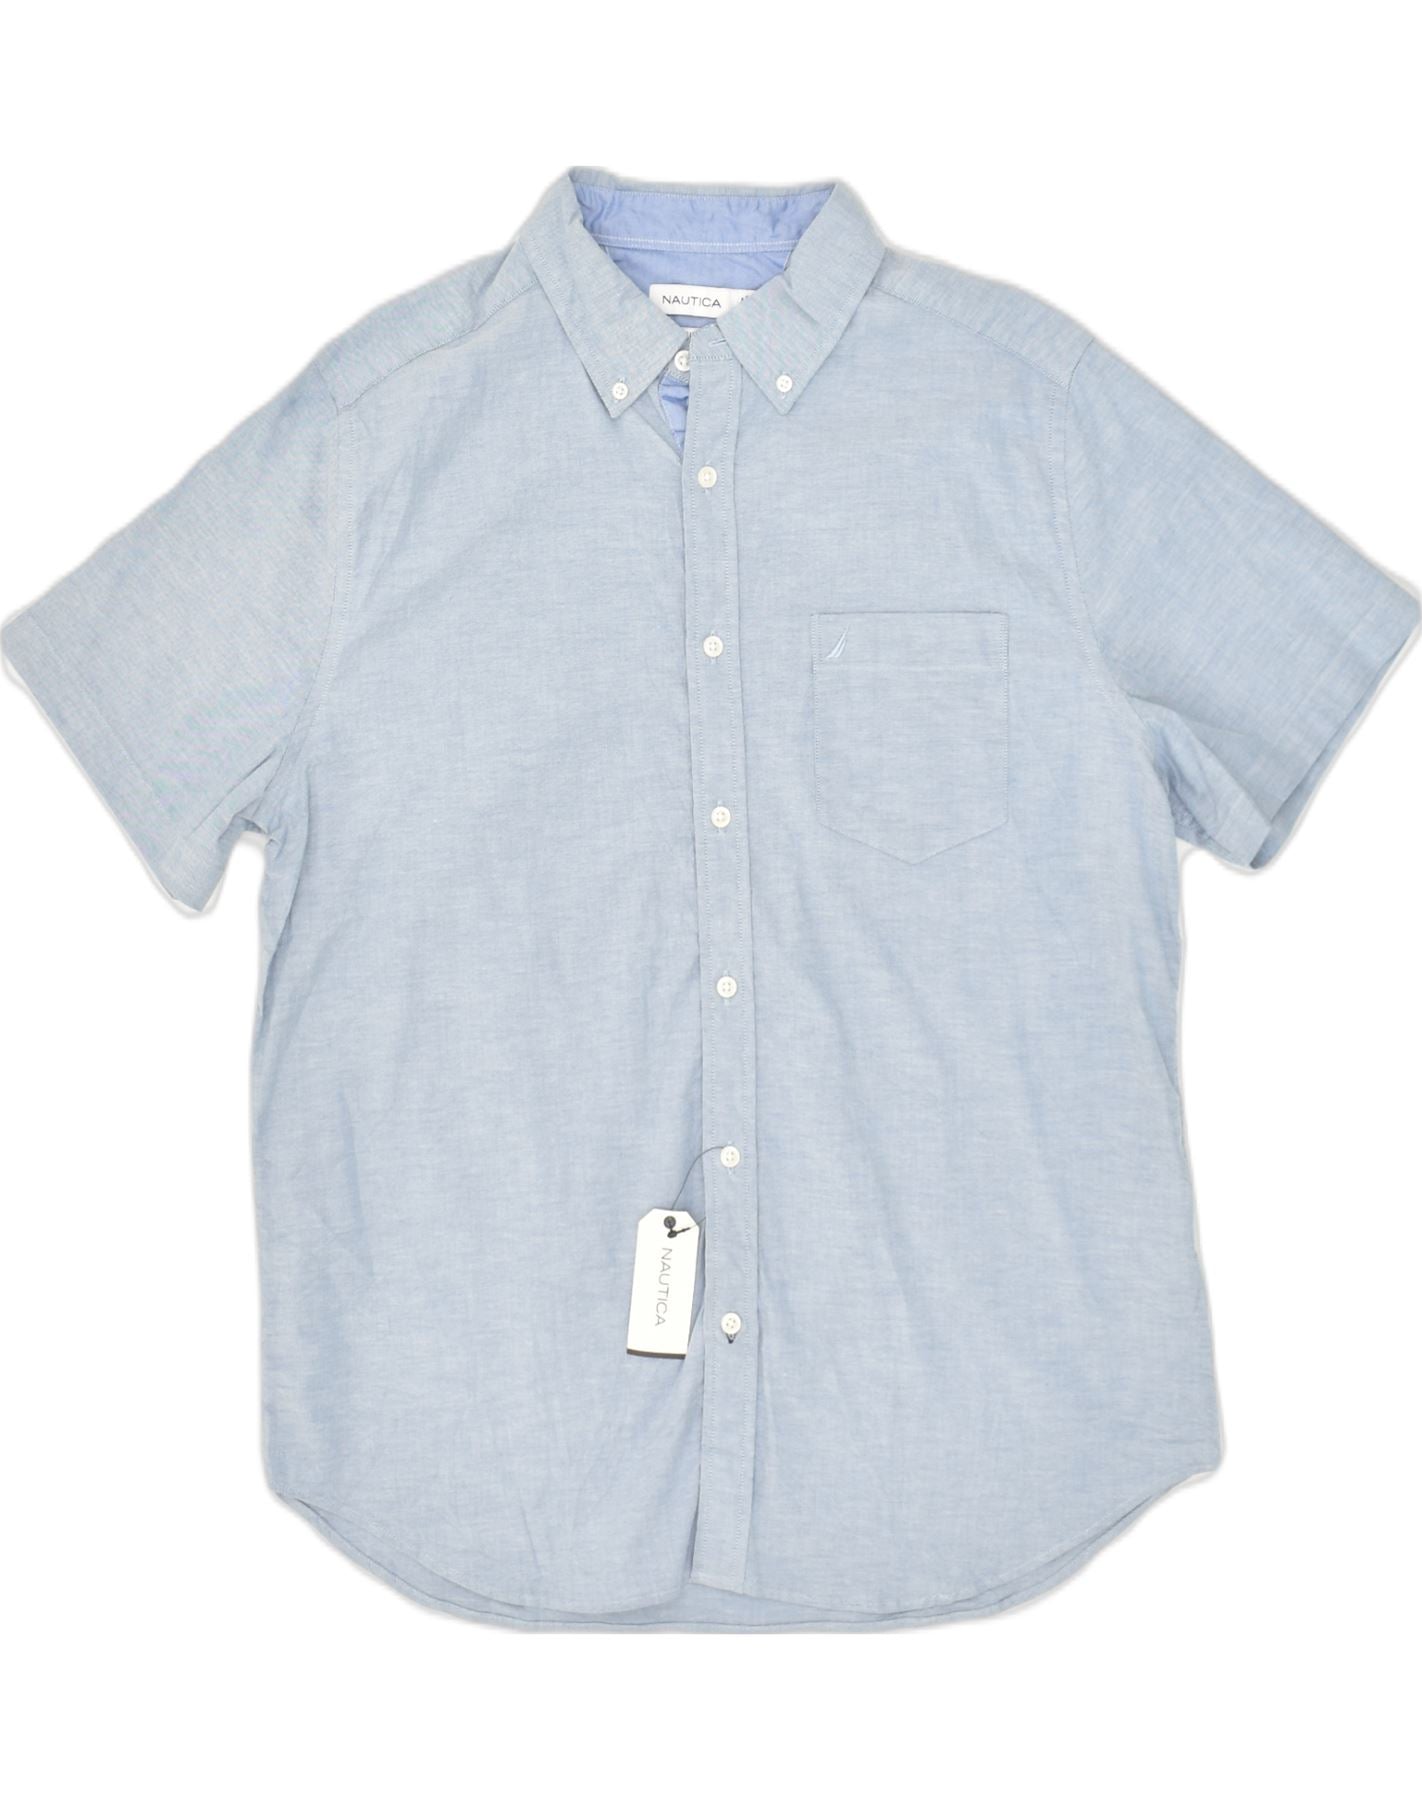 NAUTICA Mens Stretch Classic Fit Short Sleeve Shirt Large Blue Cotton